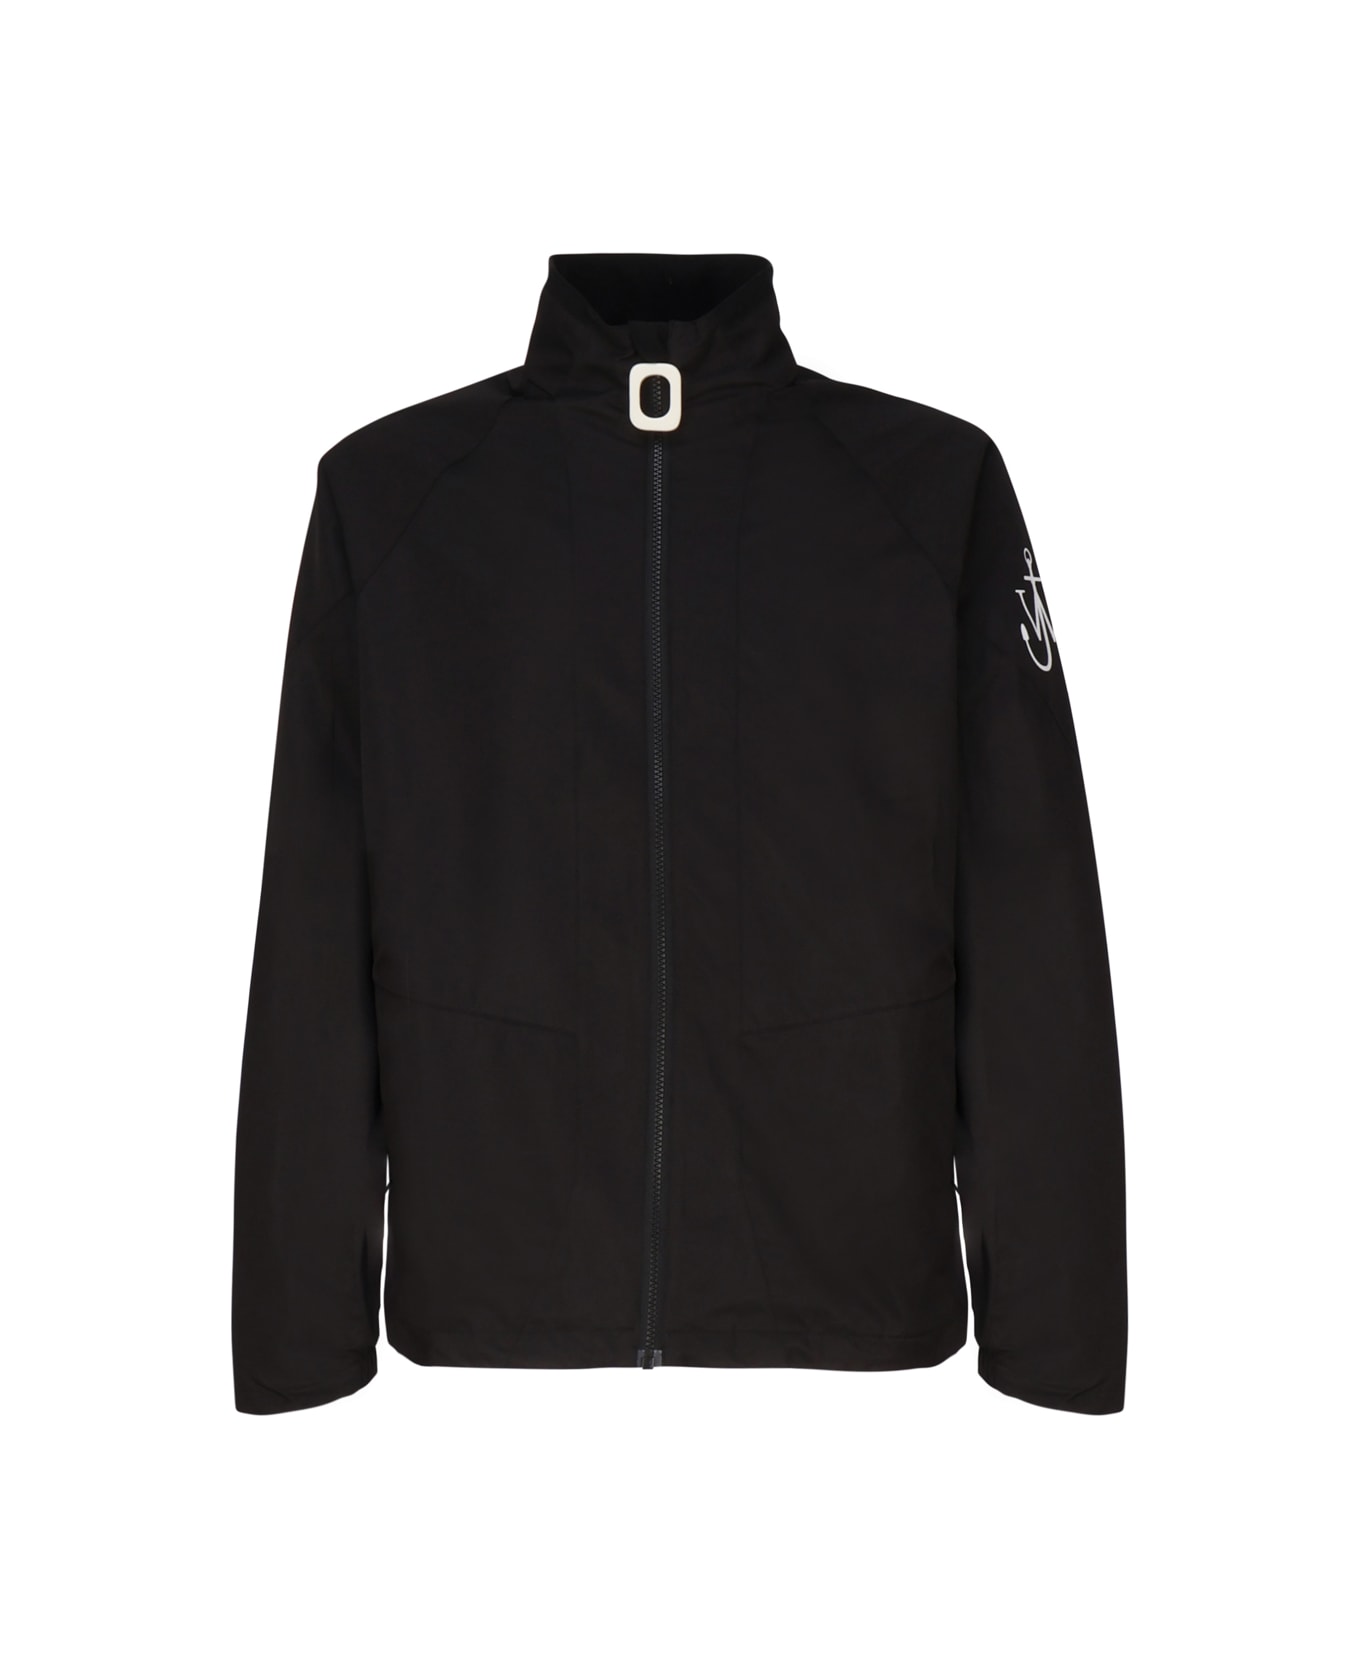 J.W. Anderson Sports Jacket With Zip - Black